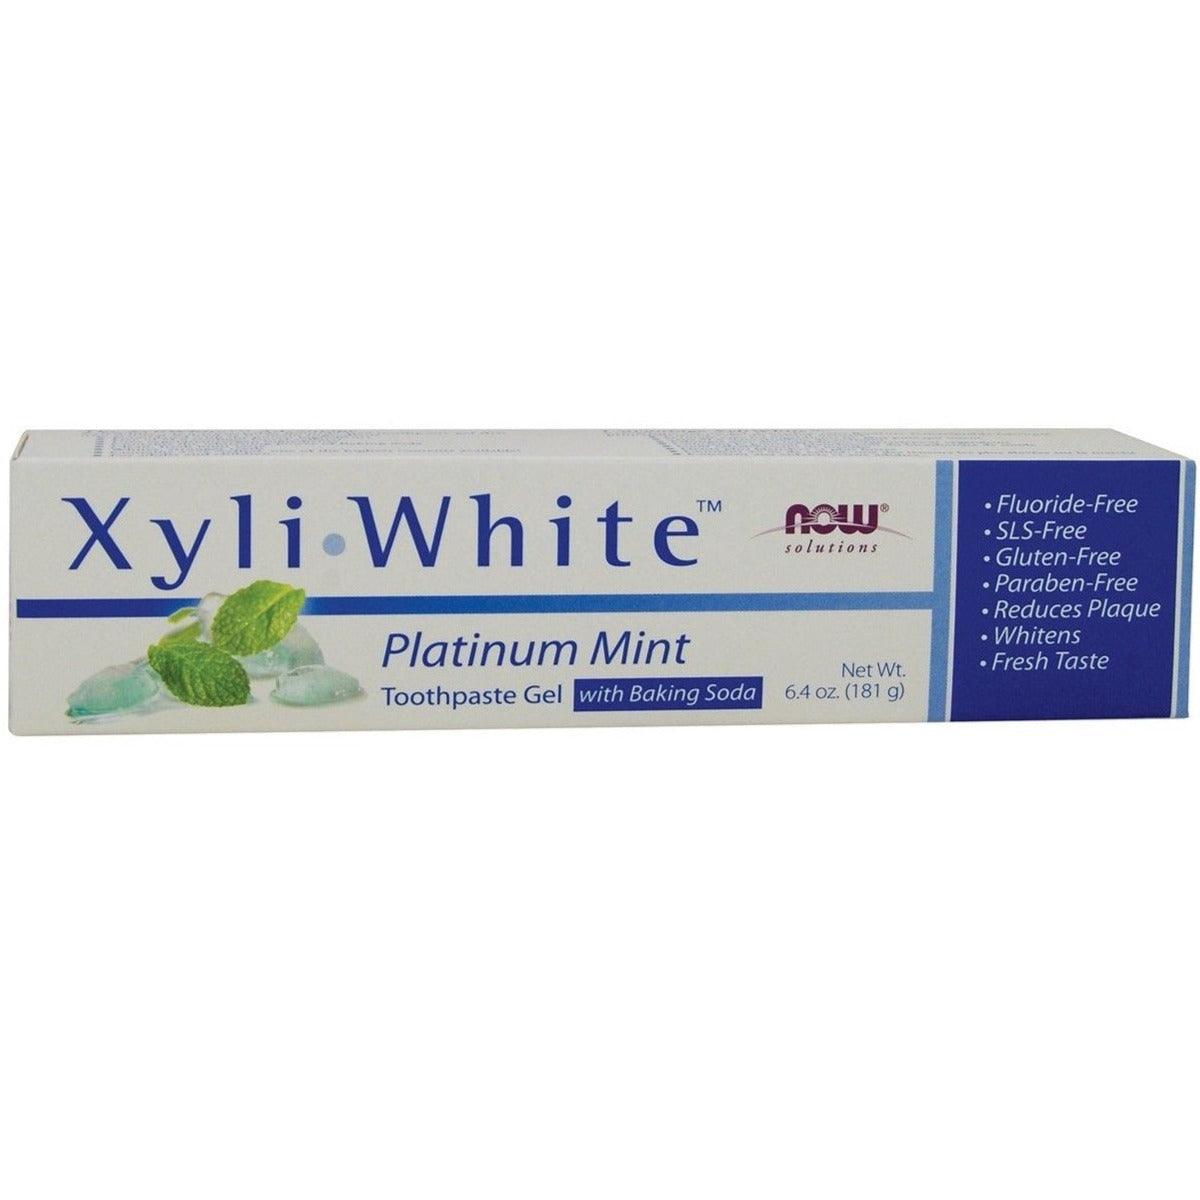 NOW Xyliwhite Toothpaste Gel Platinum Mint 181g Toothpaste at Village Vitamin Store